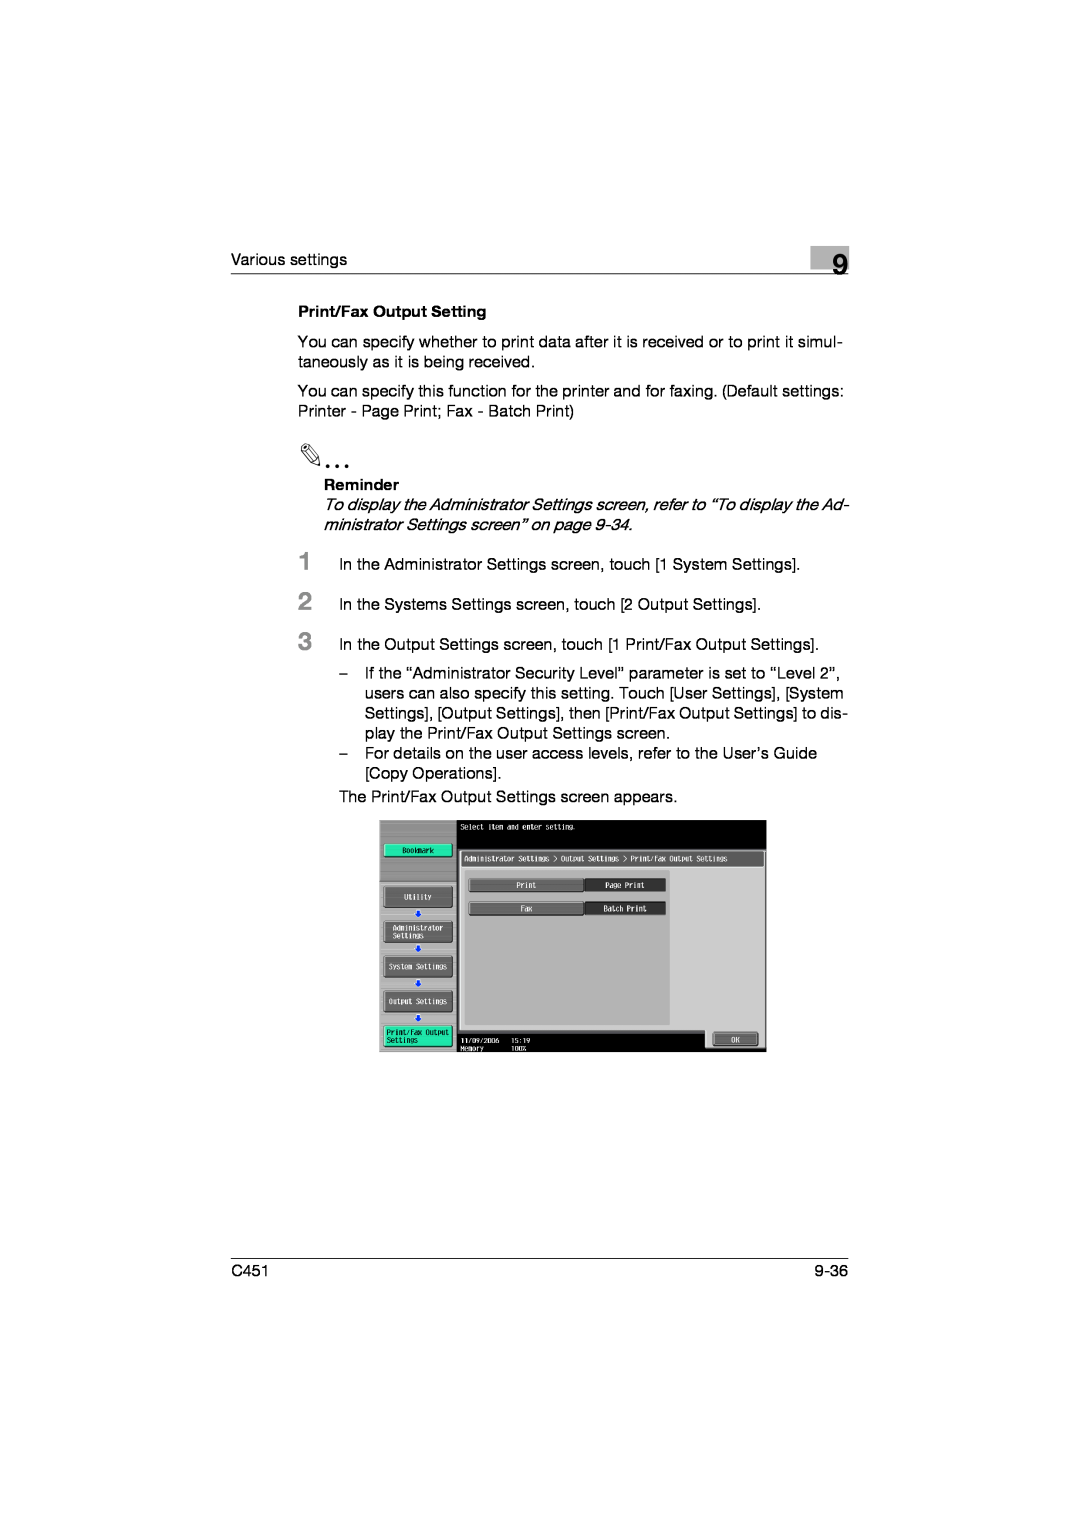 Konica Minolta C451 manual 1 2 3, Print/Fax Output Setting, Reminder 